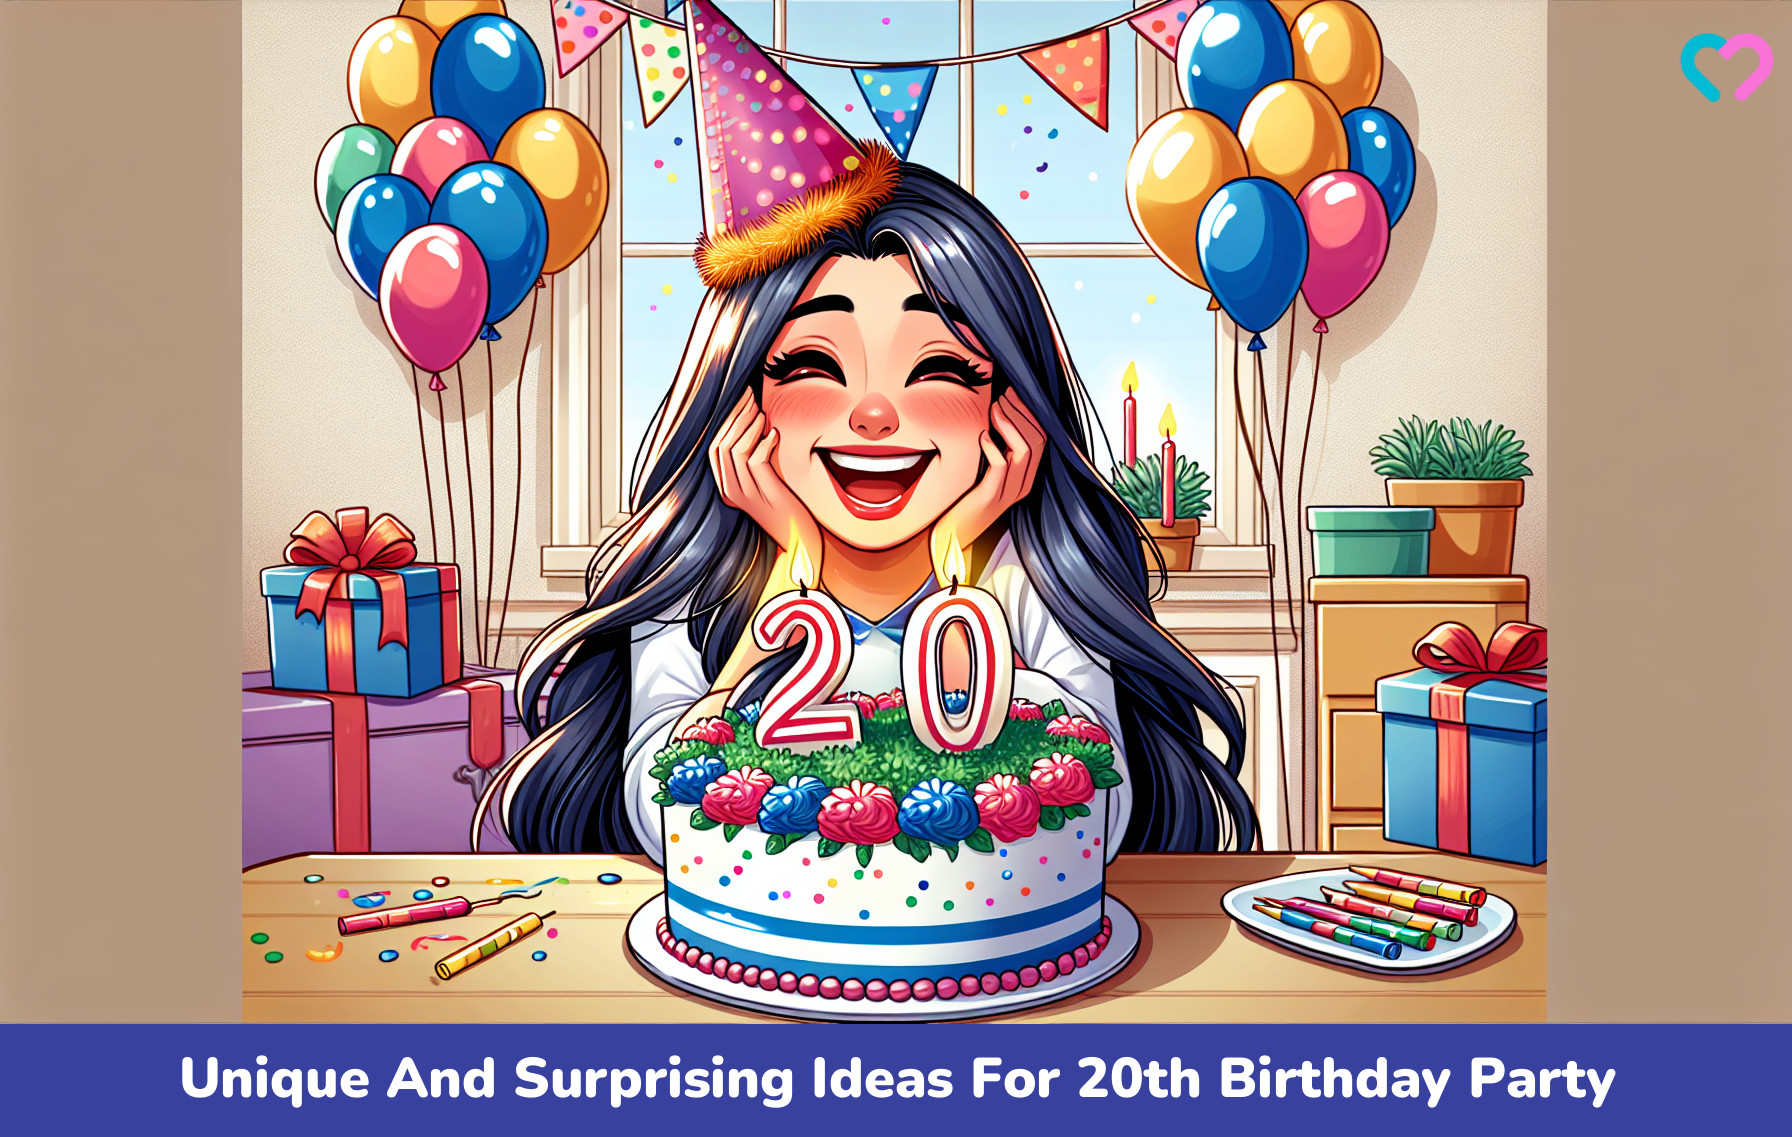 20th birthday party ideas_illustration